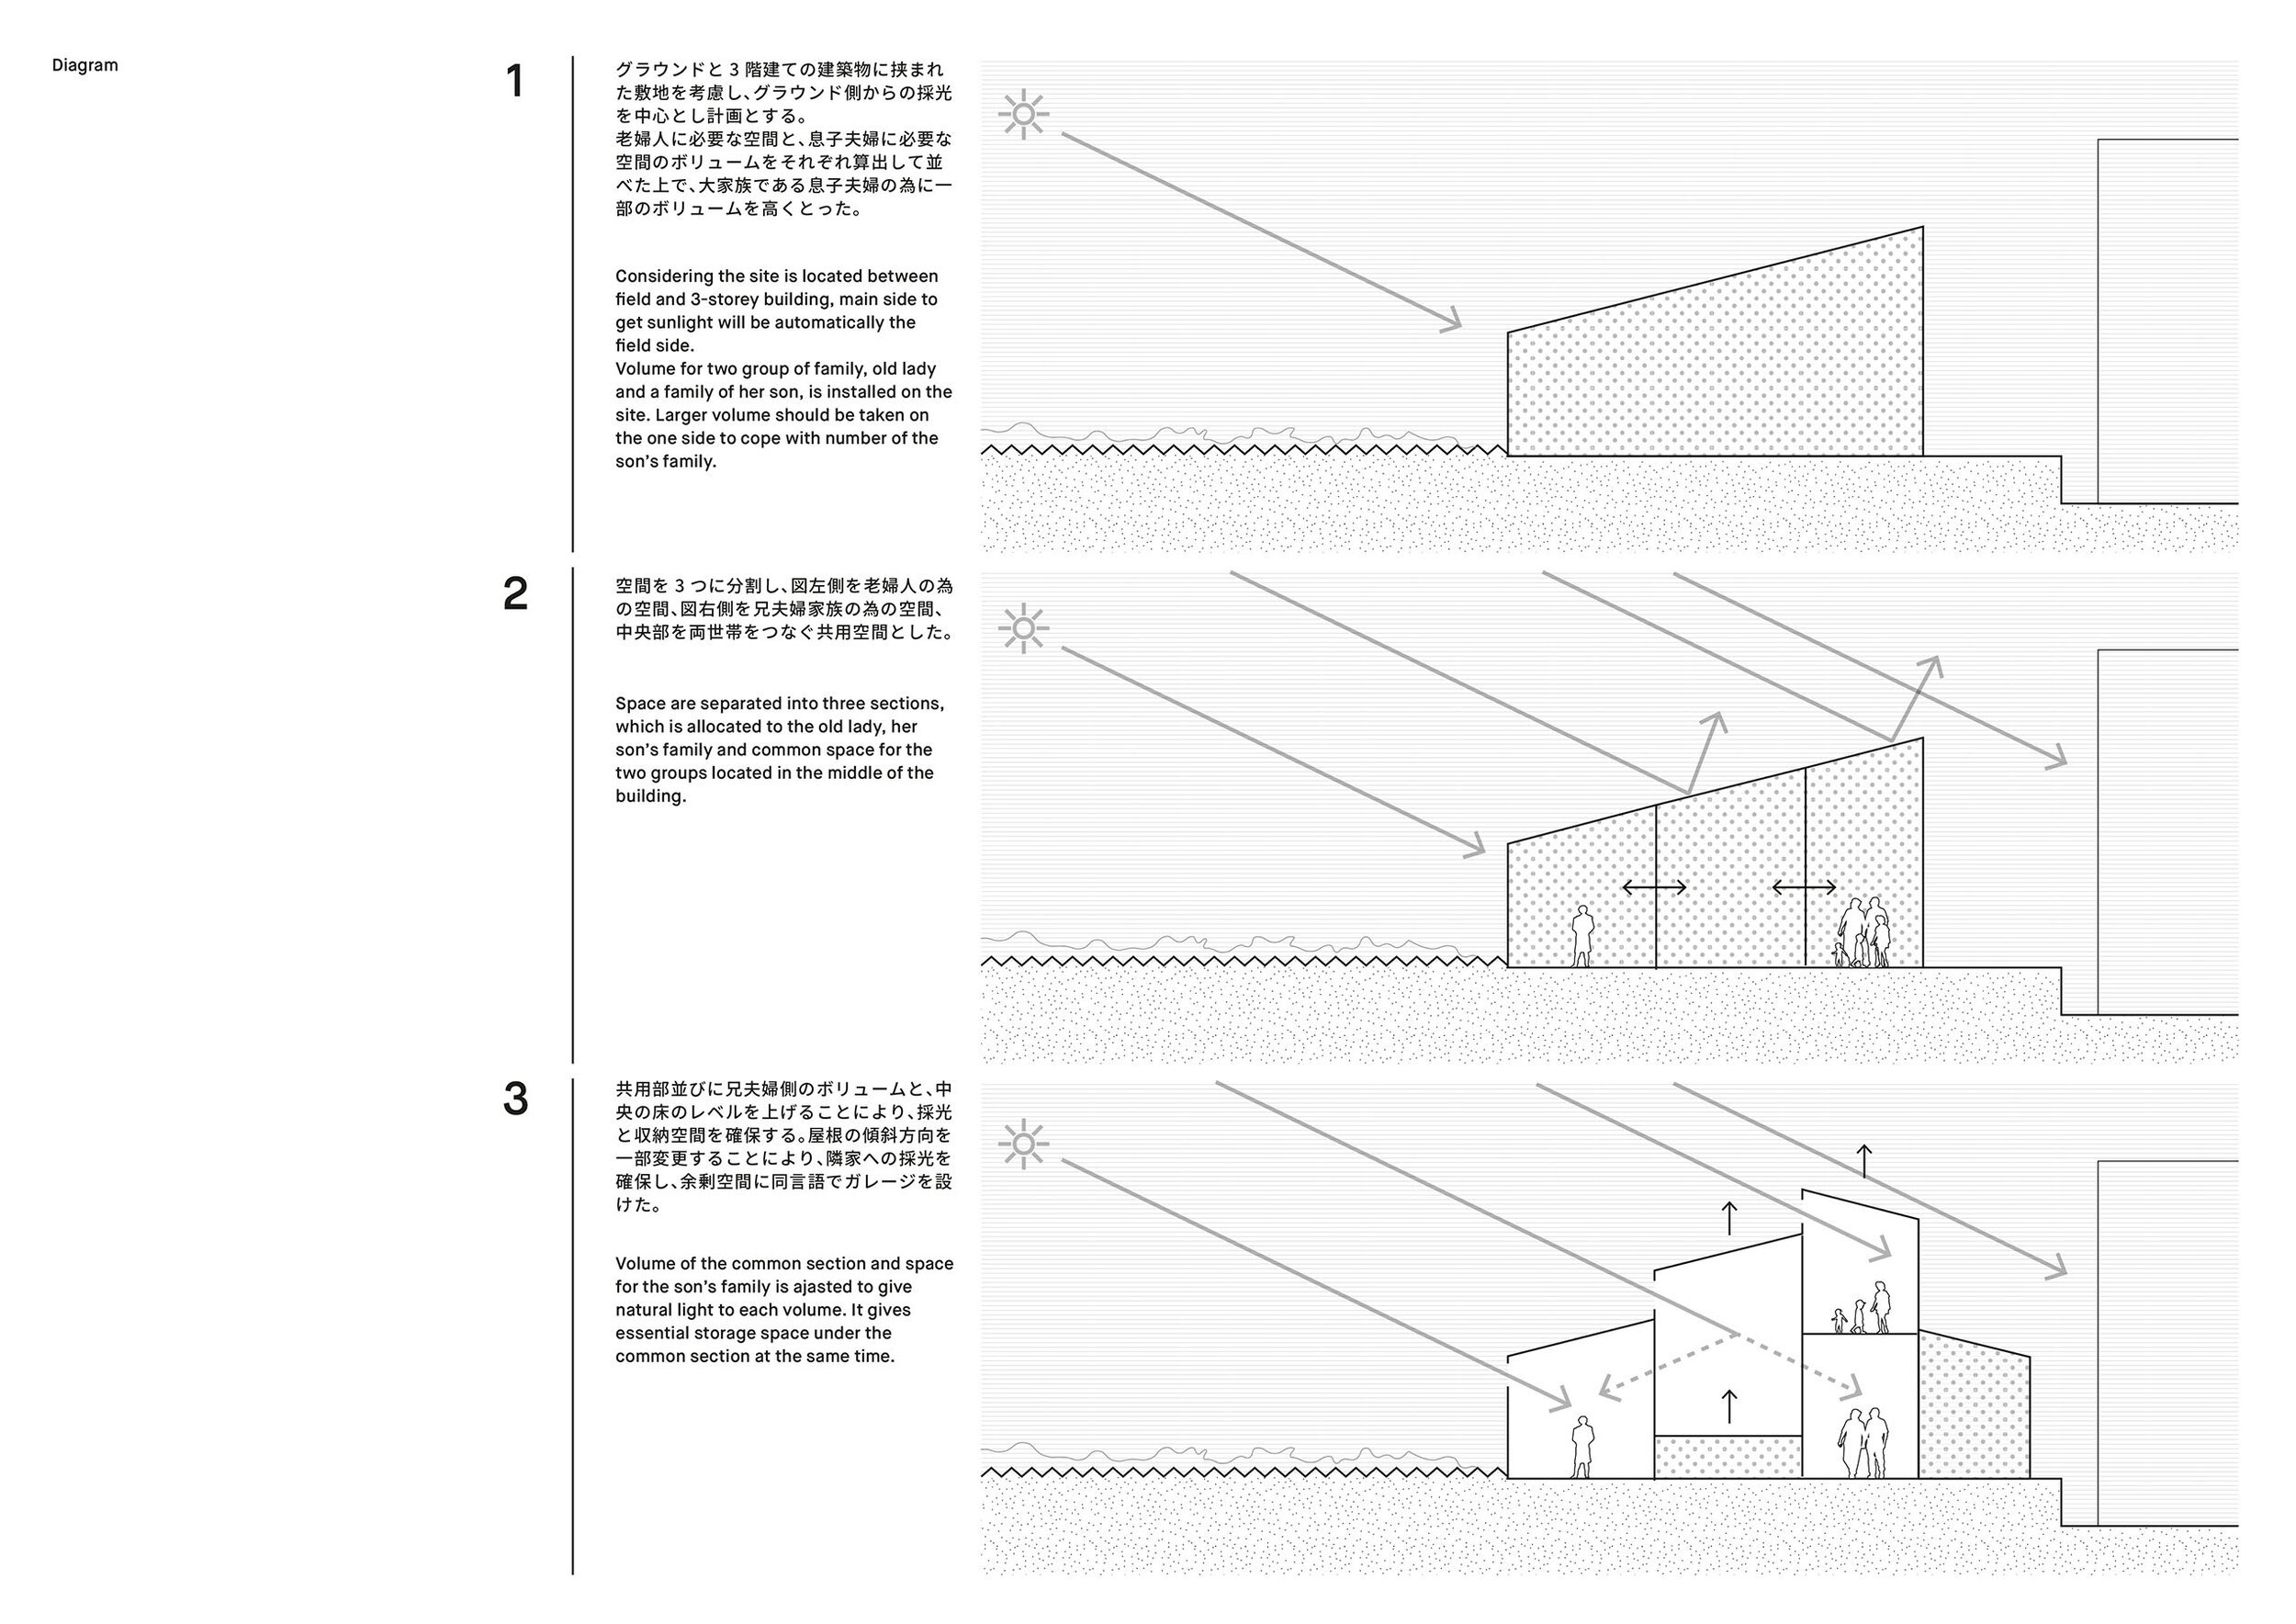  2id Architectsの岡田宰 Tsukasa Okada がデザインした住宅 Dan Dan Dan Houseのダイアグラム 